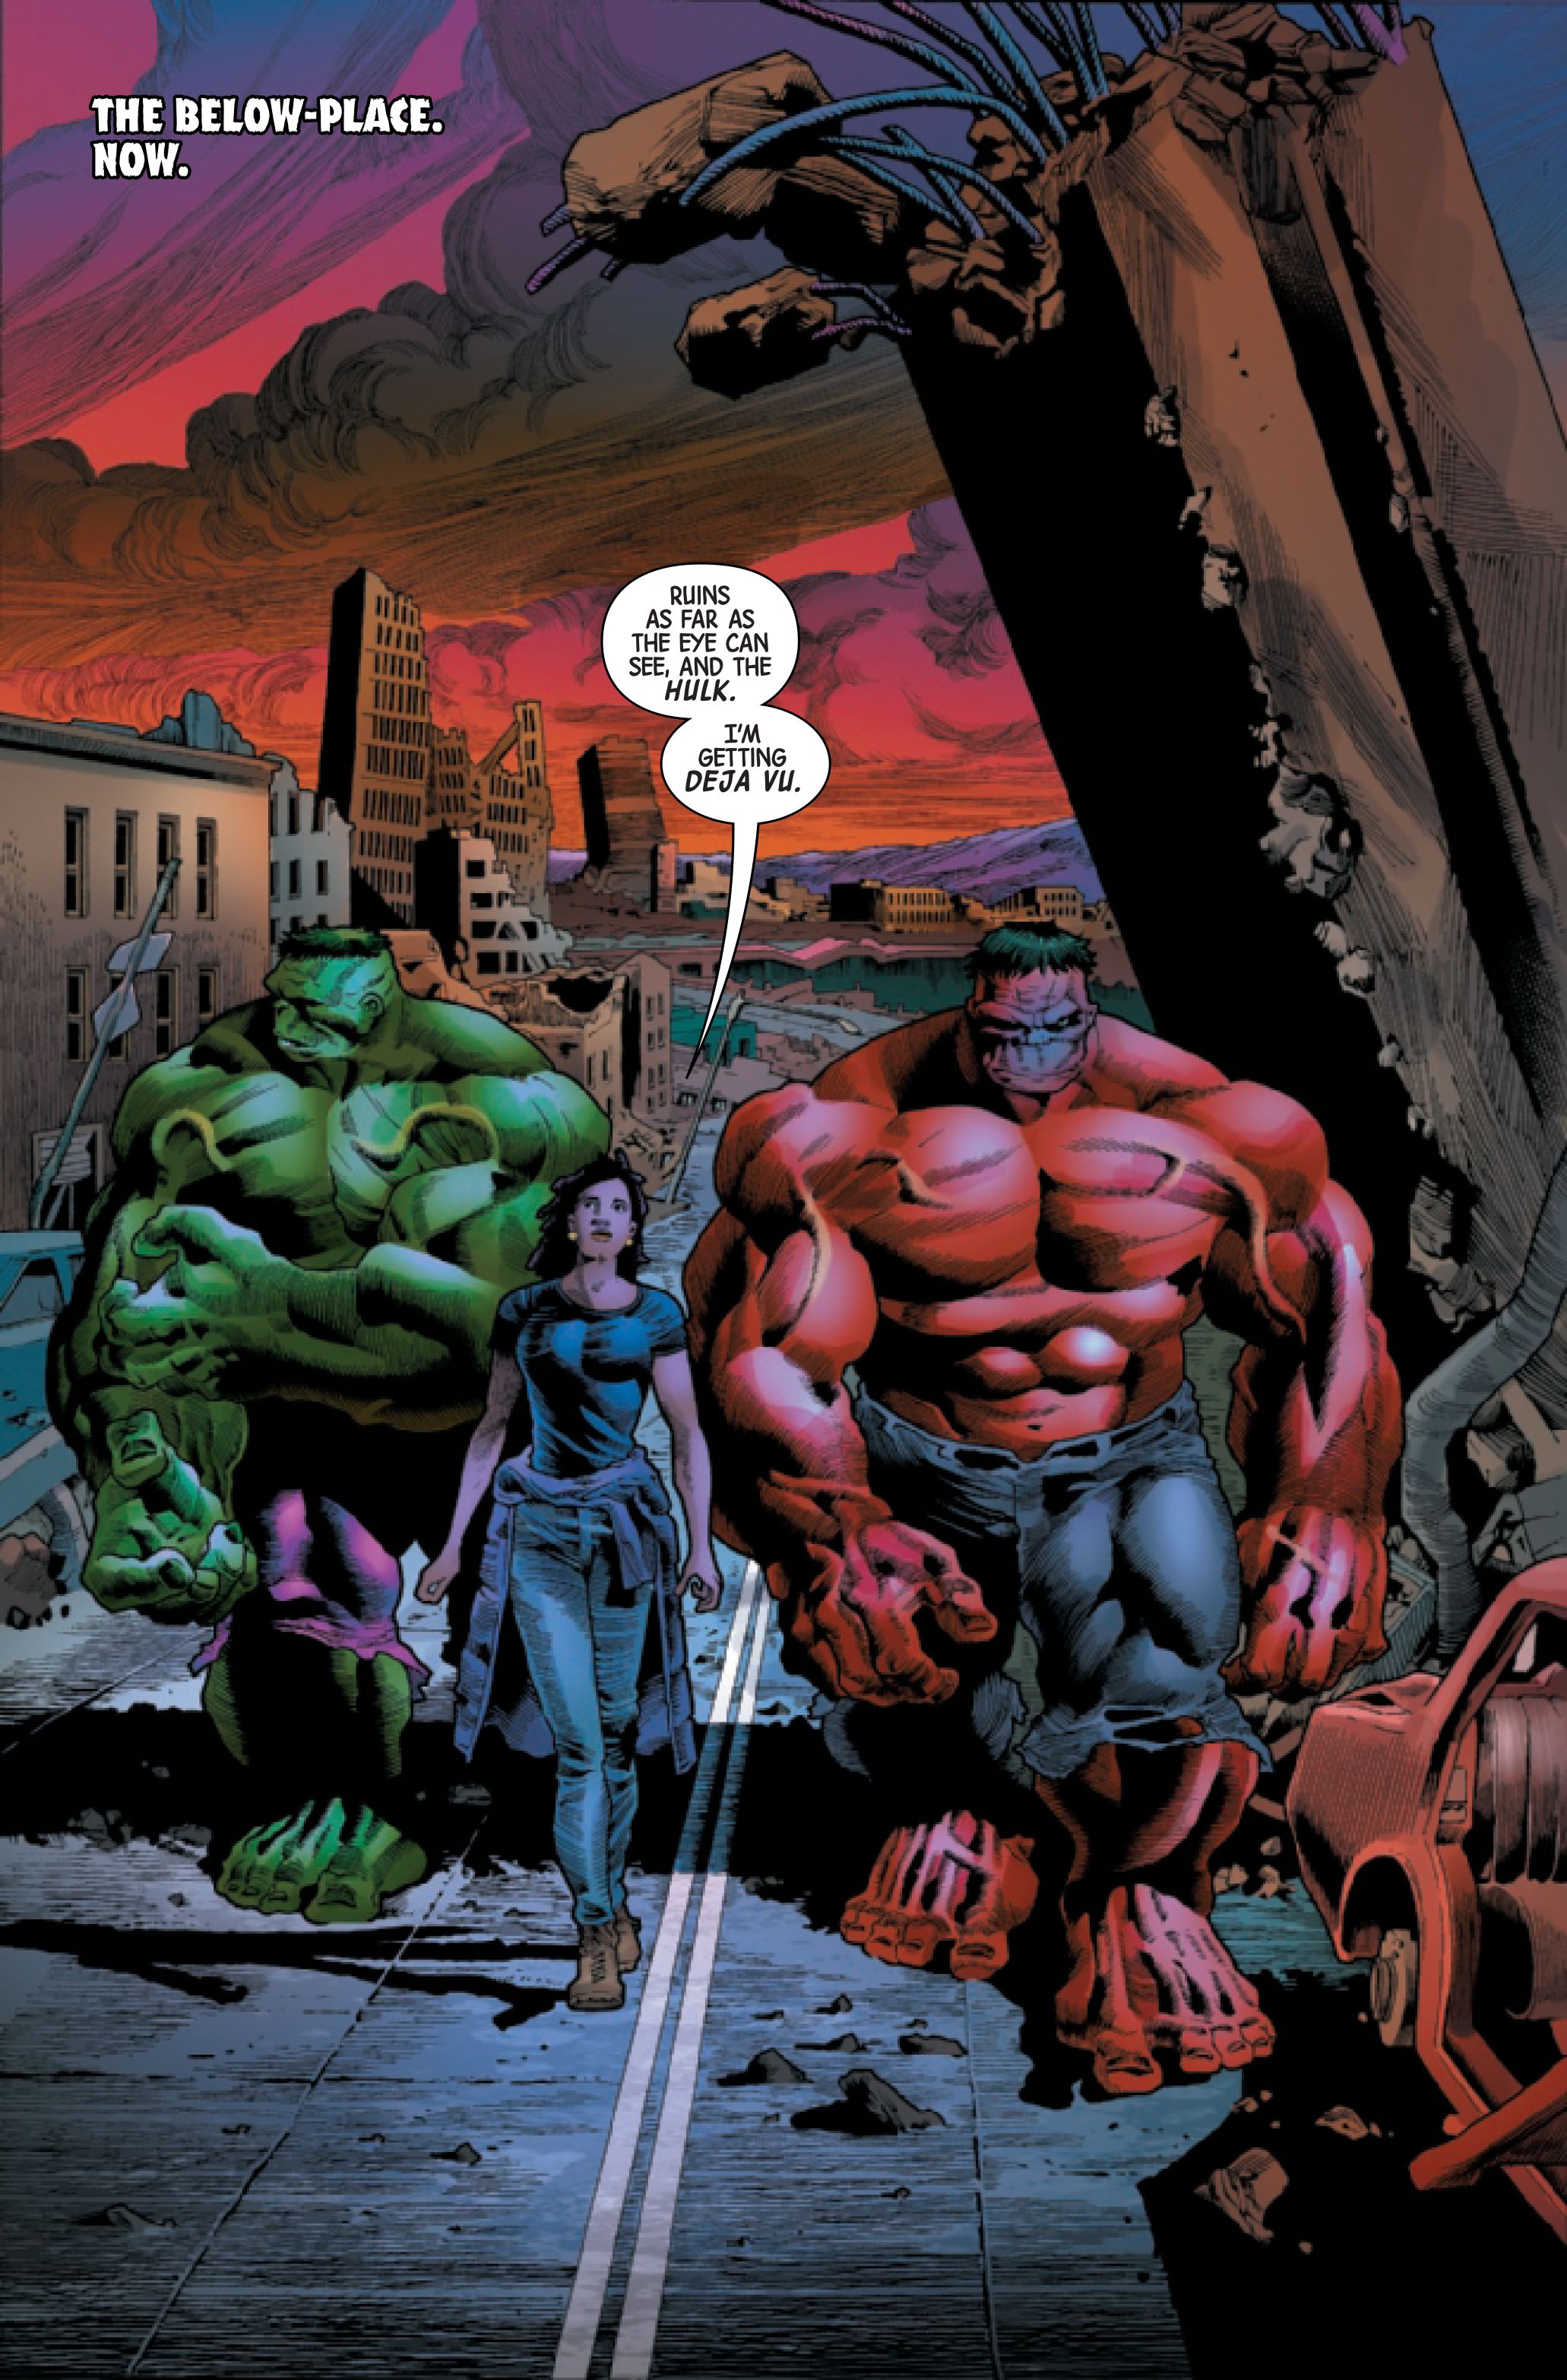 Page 1 of Hulk #50, by Al Ewing and Joe Bennett.